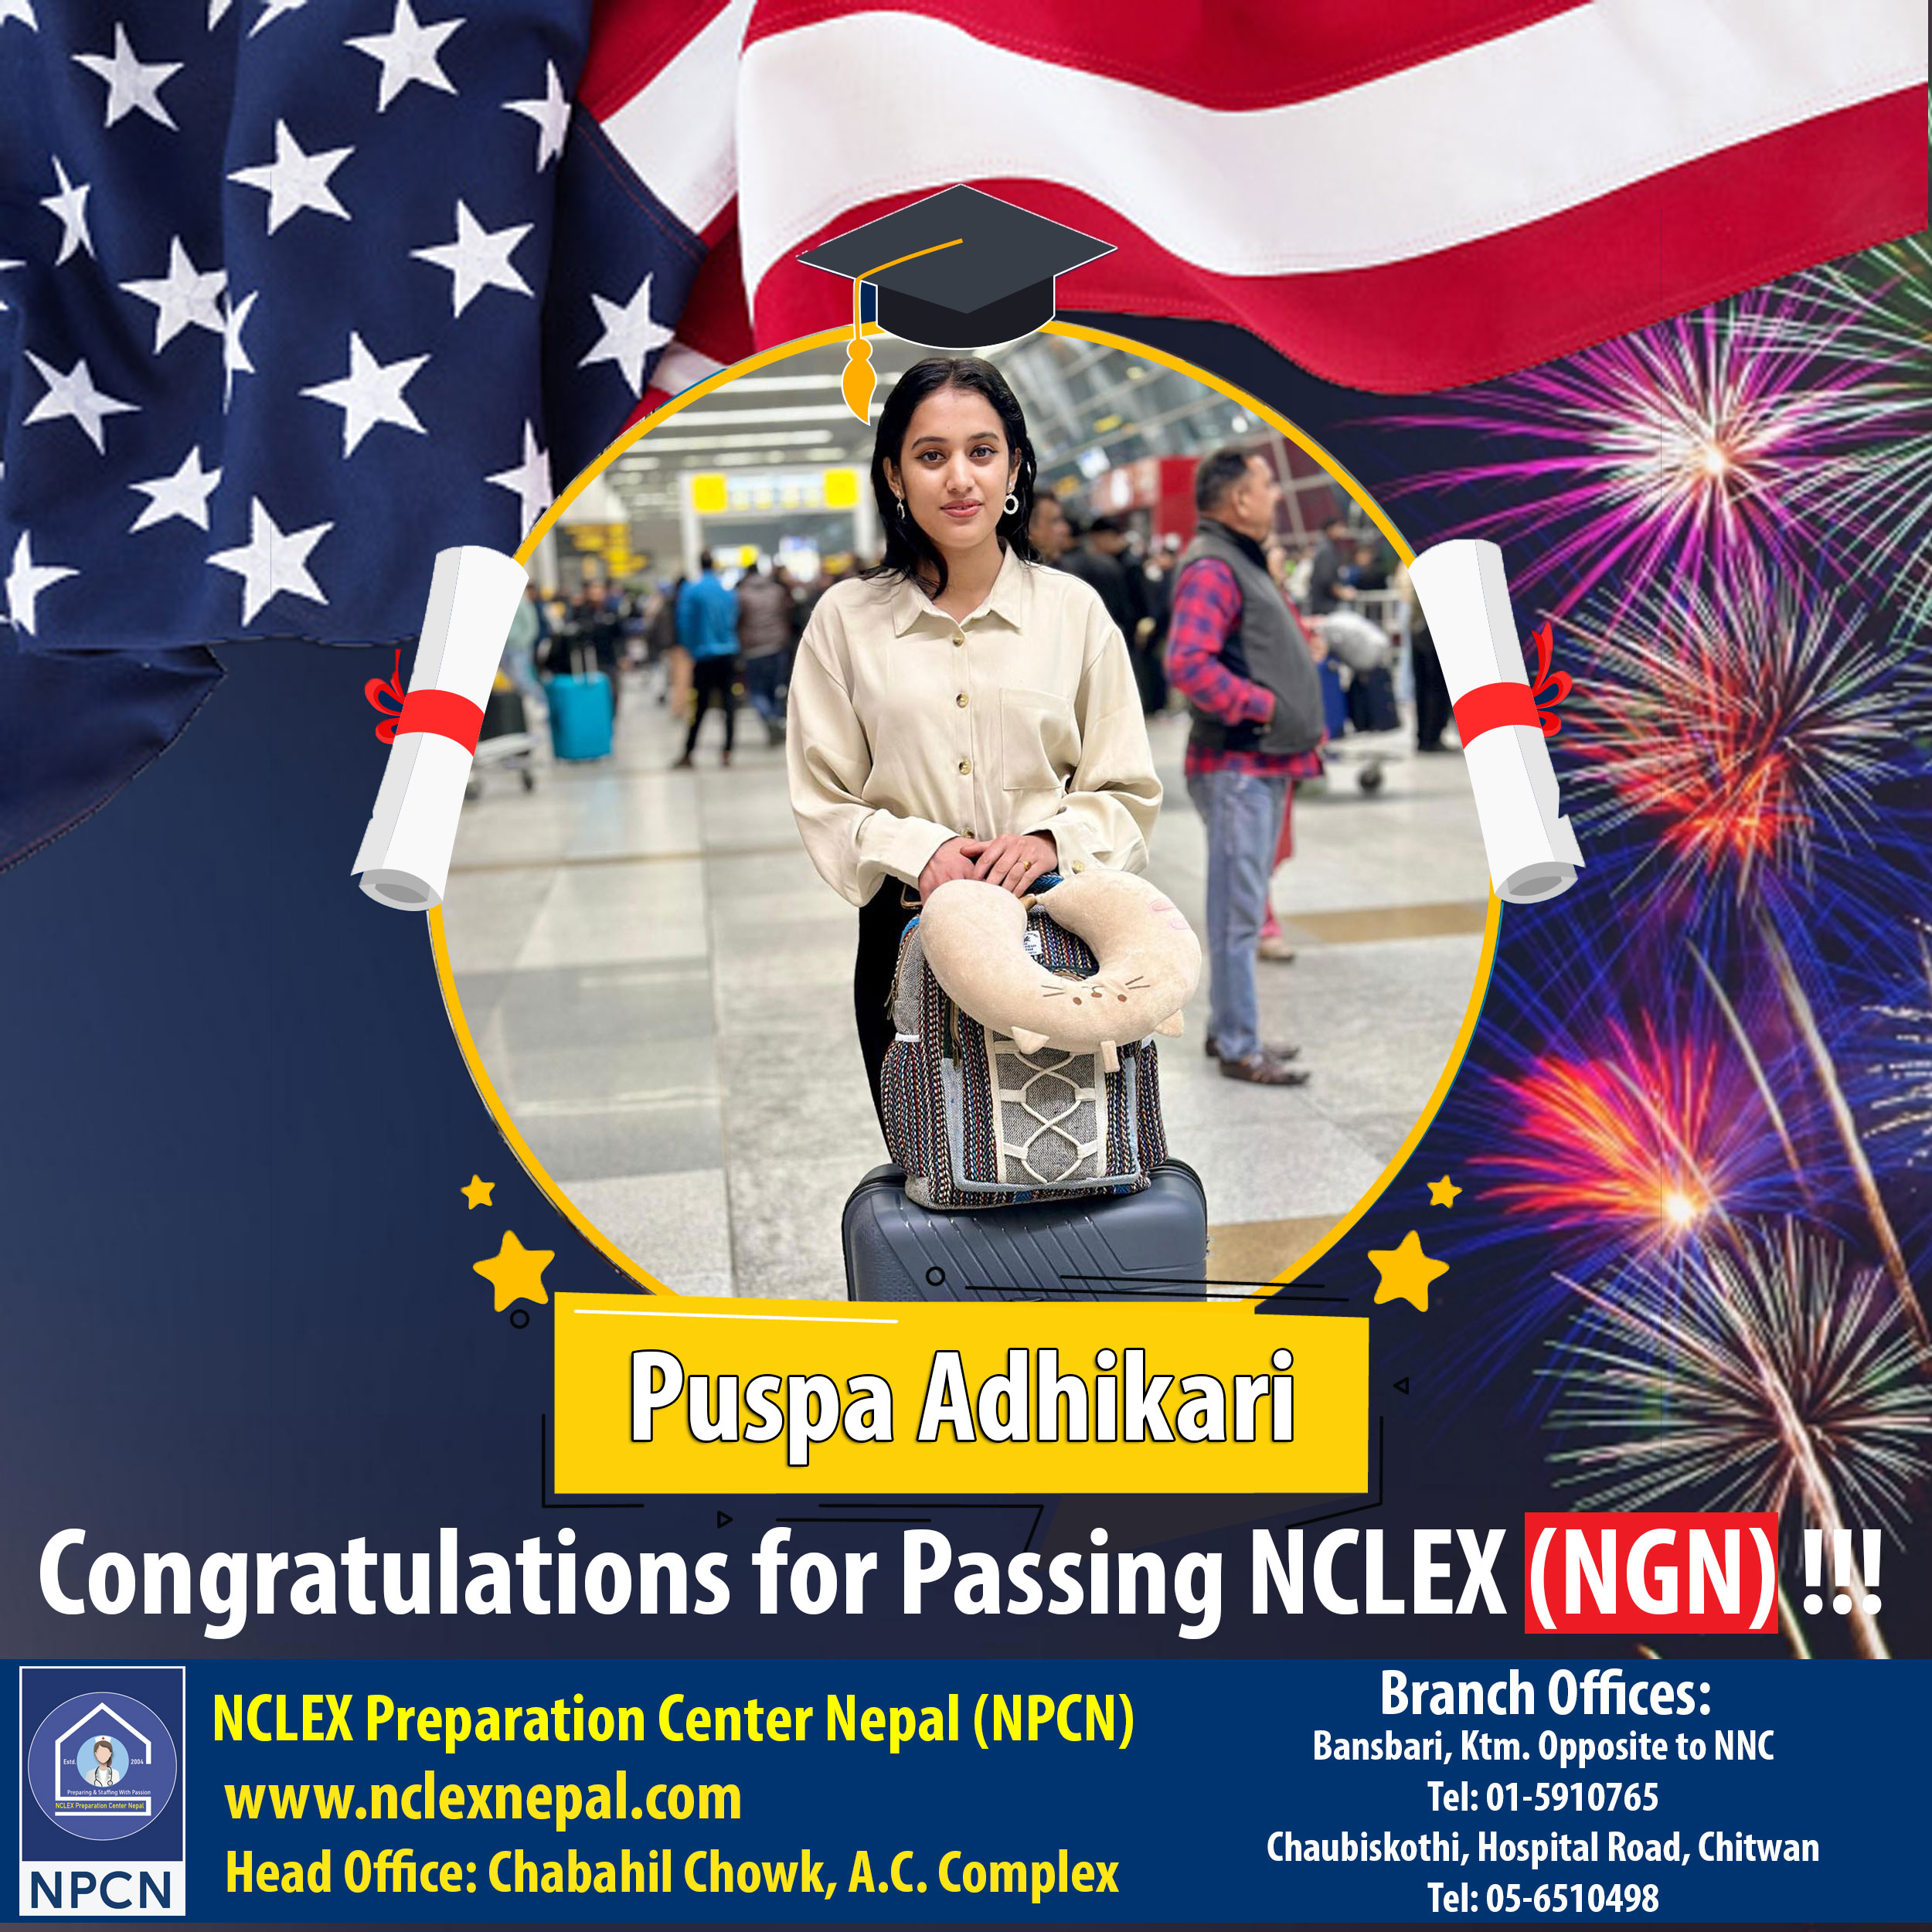 NCLEX Passed, NCLEX Passers, Congratulations for passing NCLEX, NPCN, nclexnepal.com